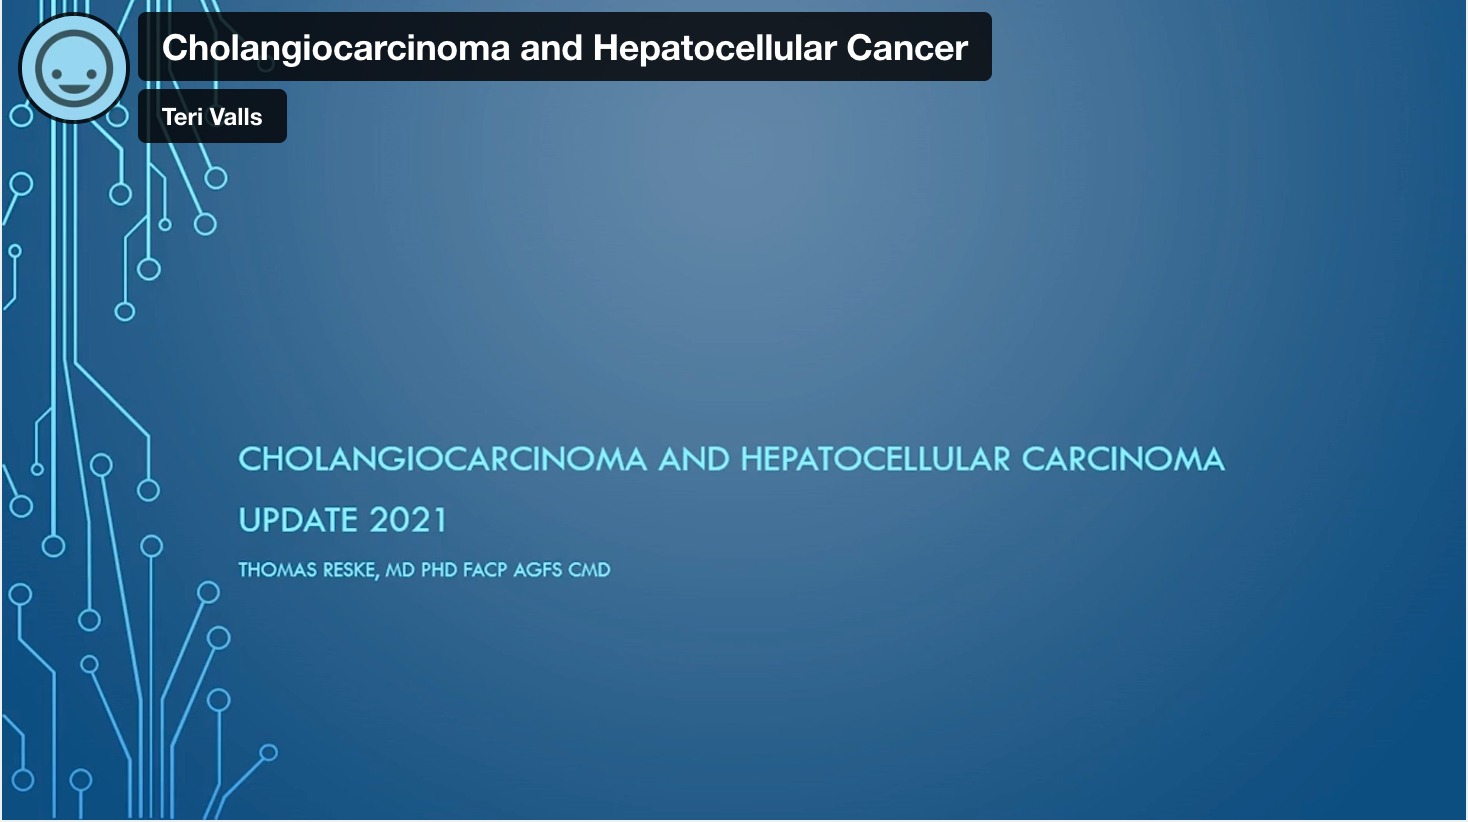 Cholangiocarcinoma and Hepatocellular Cancer